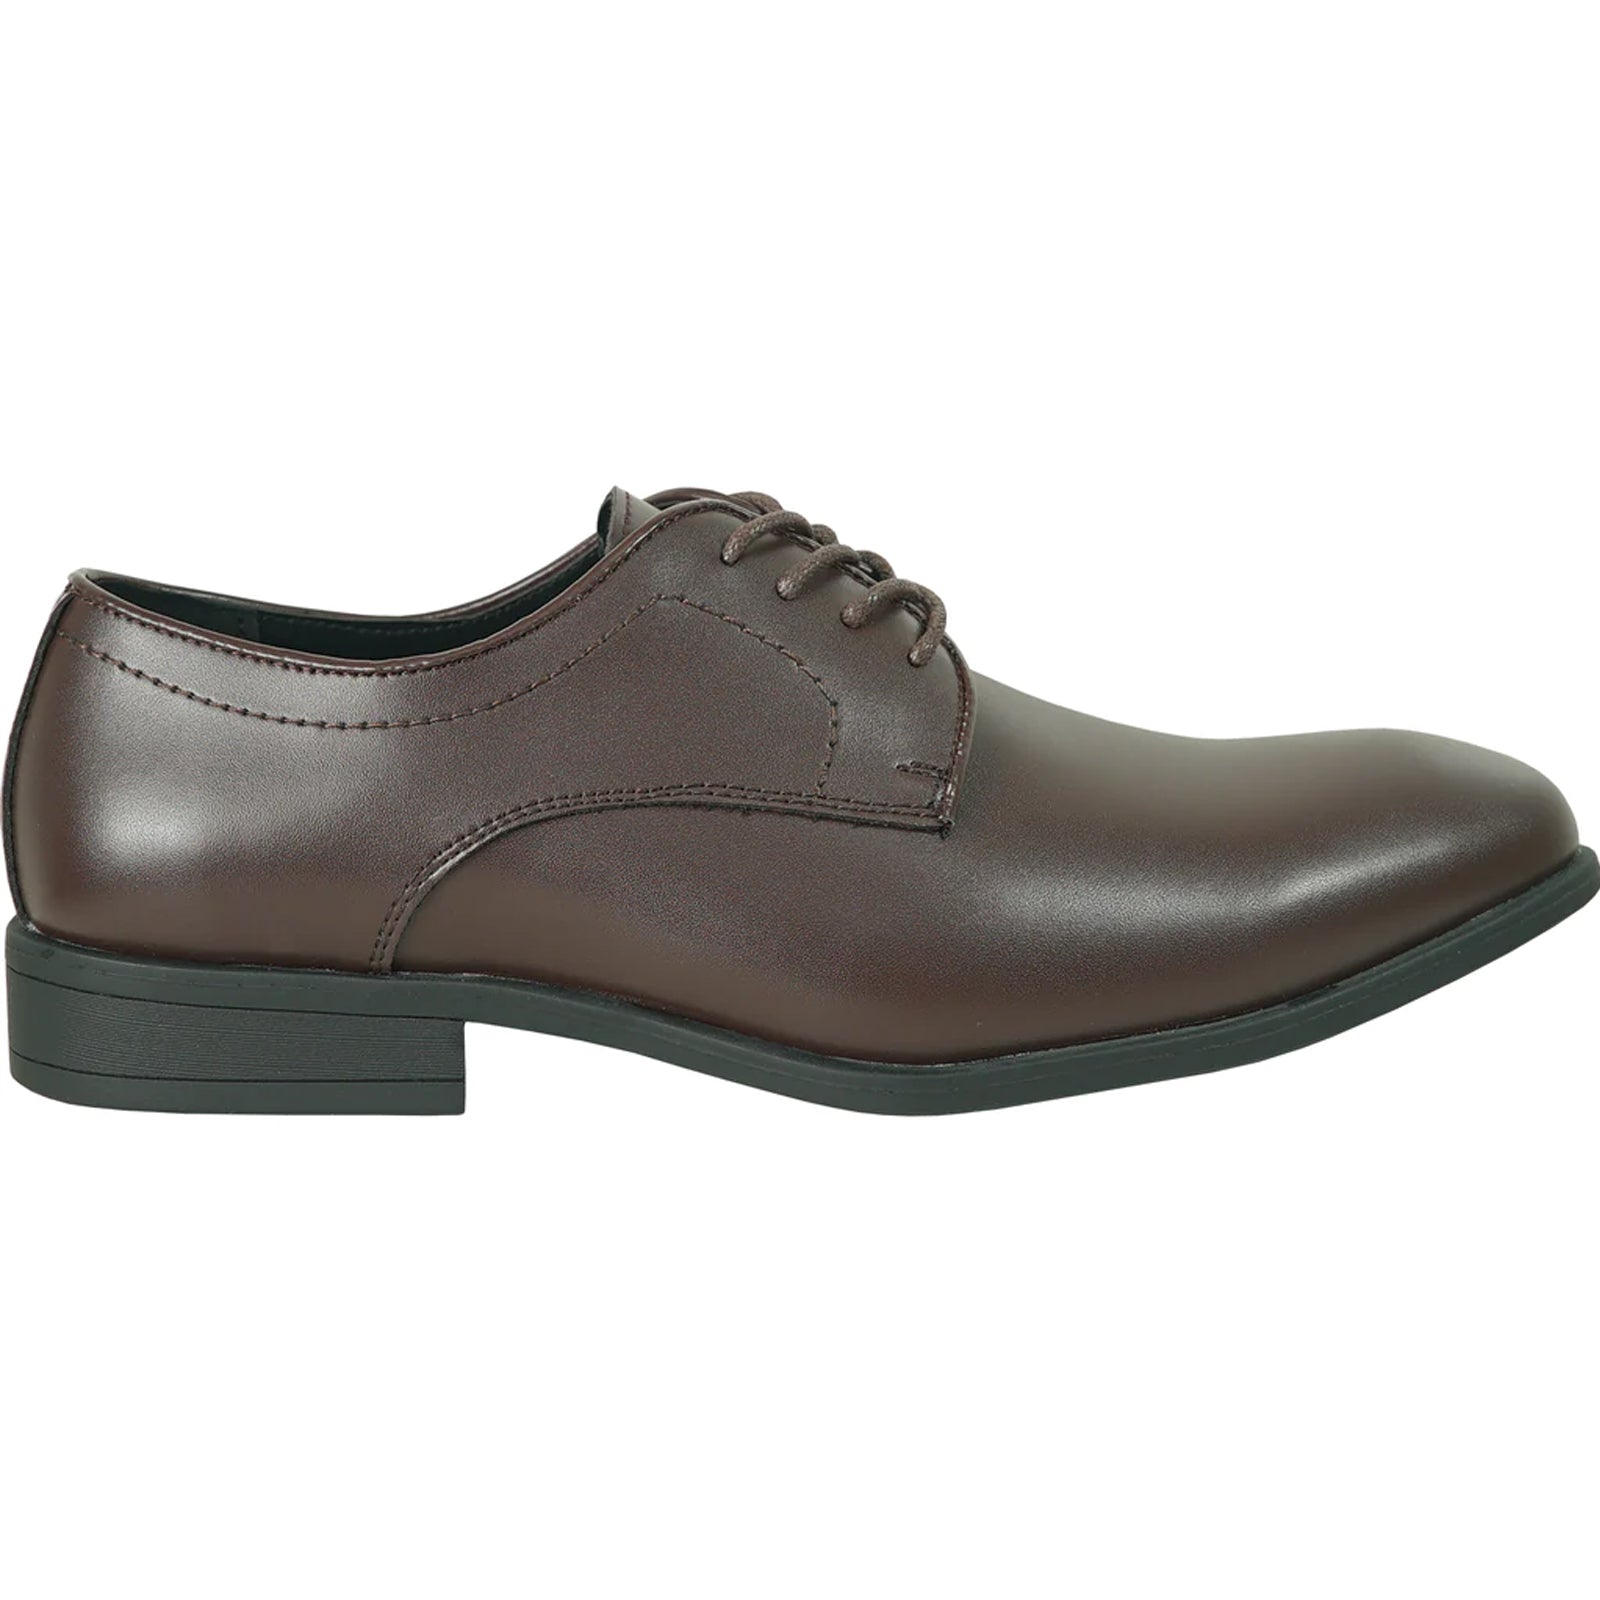 "Dark Brown Men's Oxford Dress Shoes - Plain Round Toe Style"